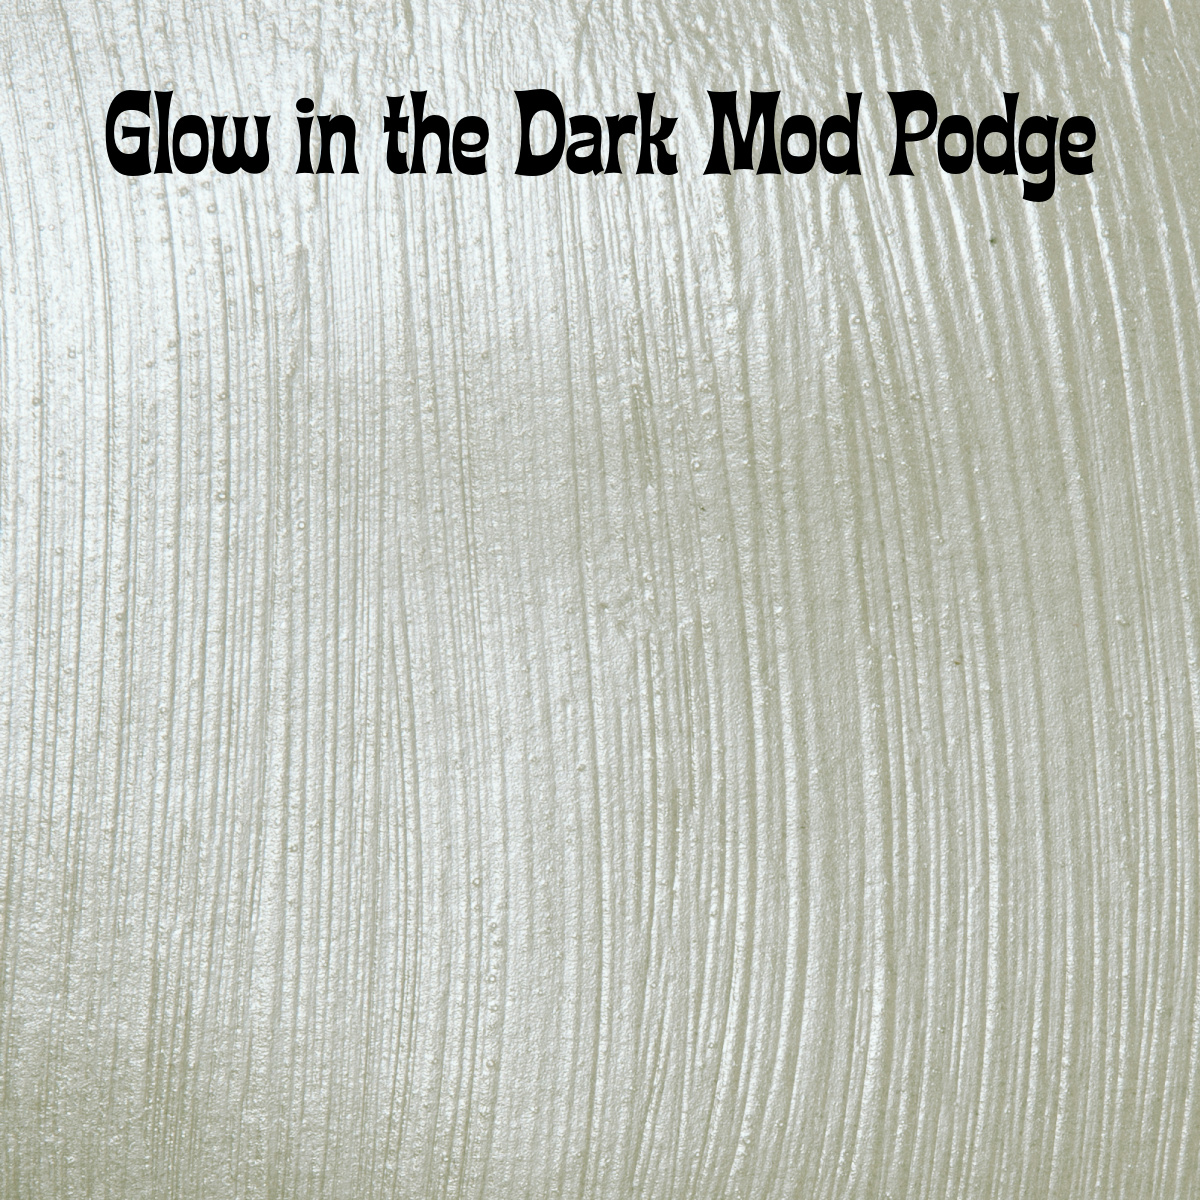 Glow in the Dark Mod Podge swatch